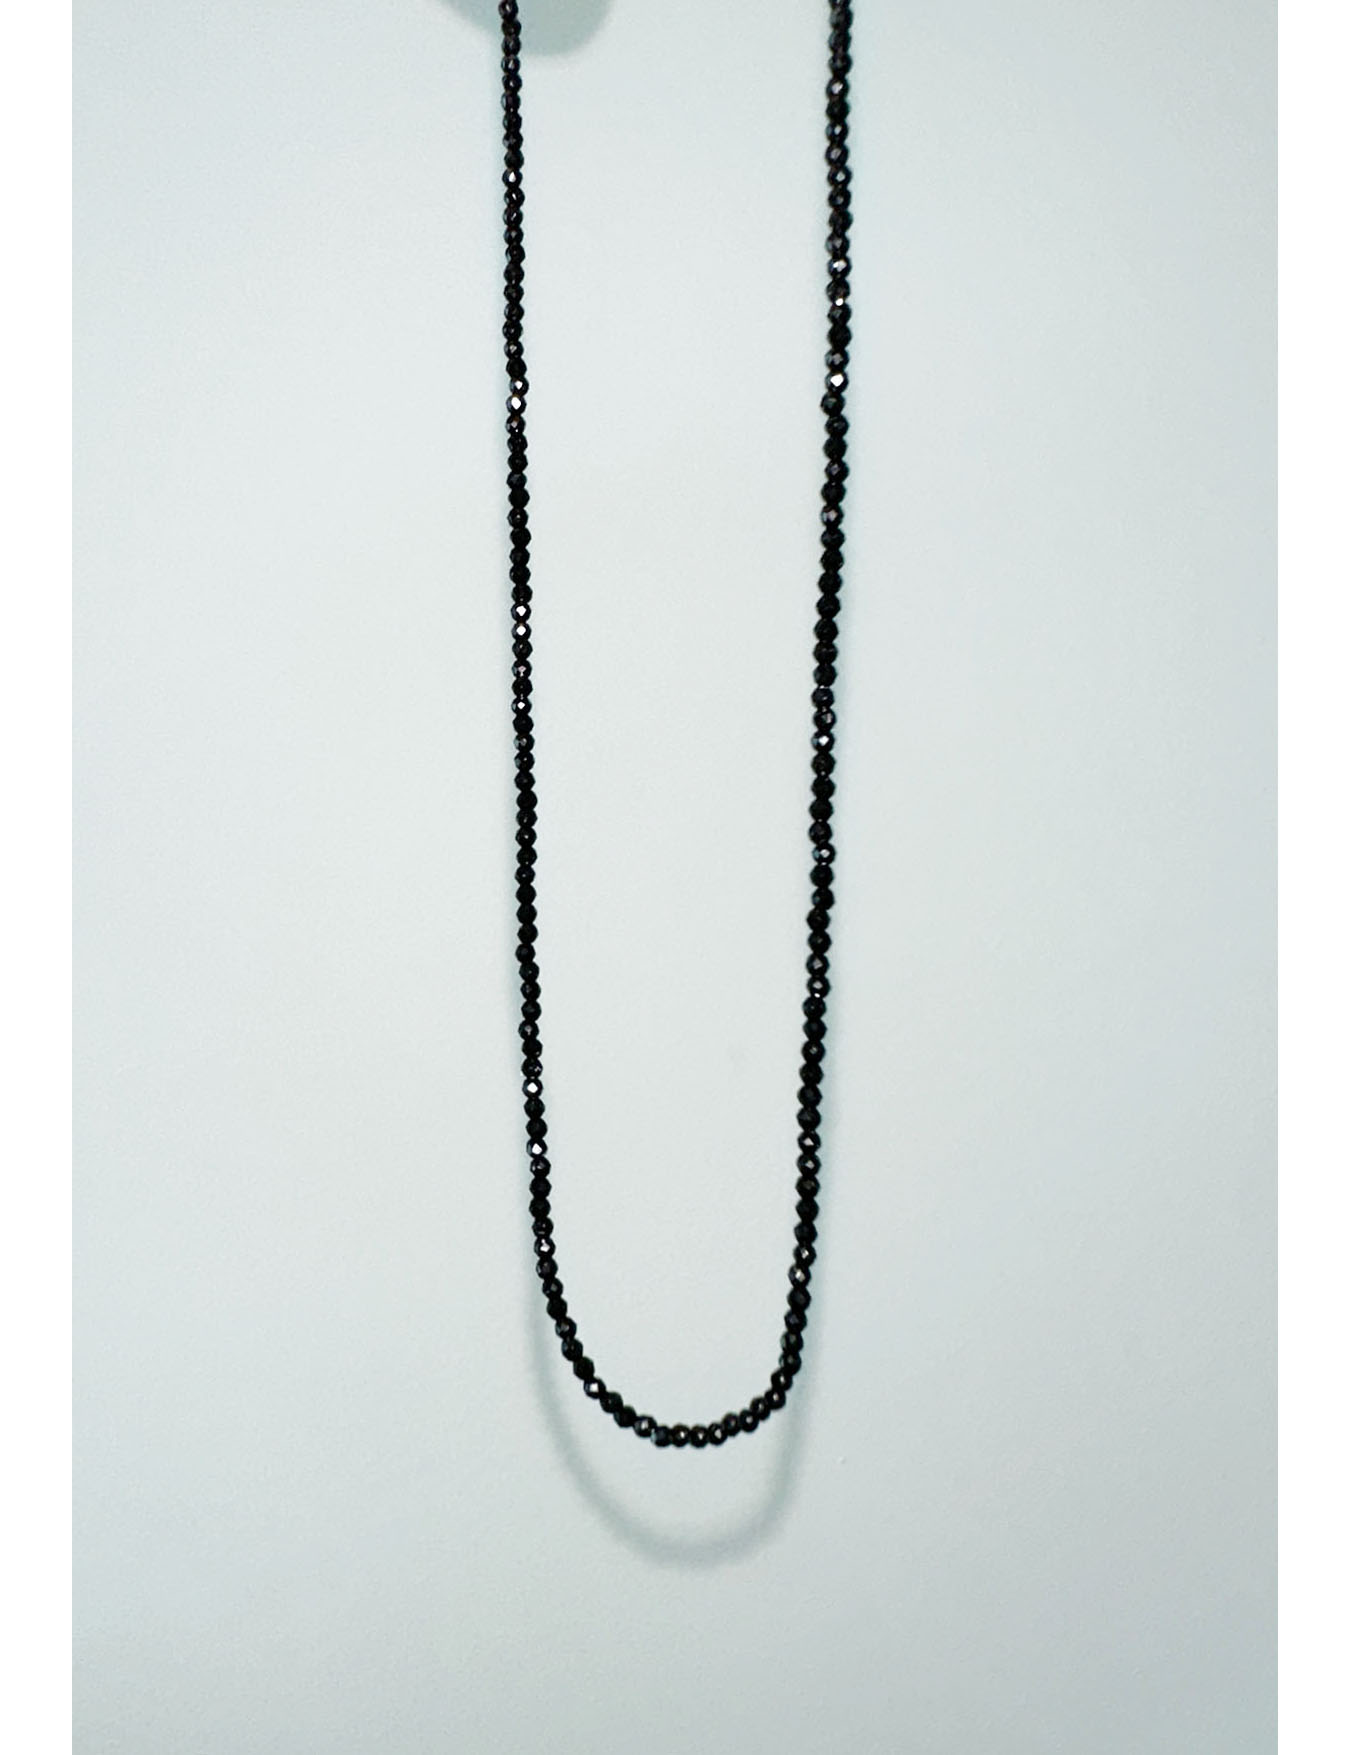 black beads necklace